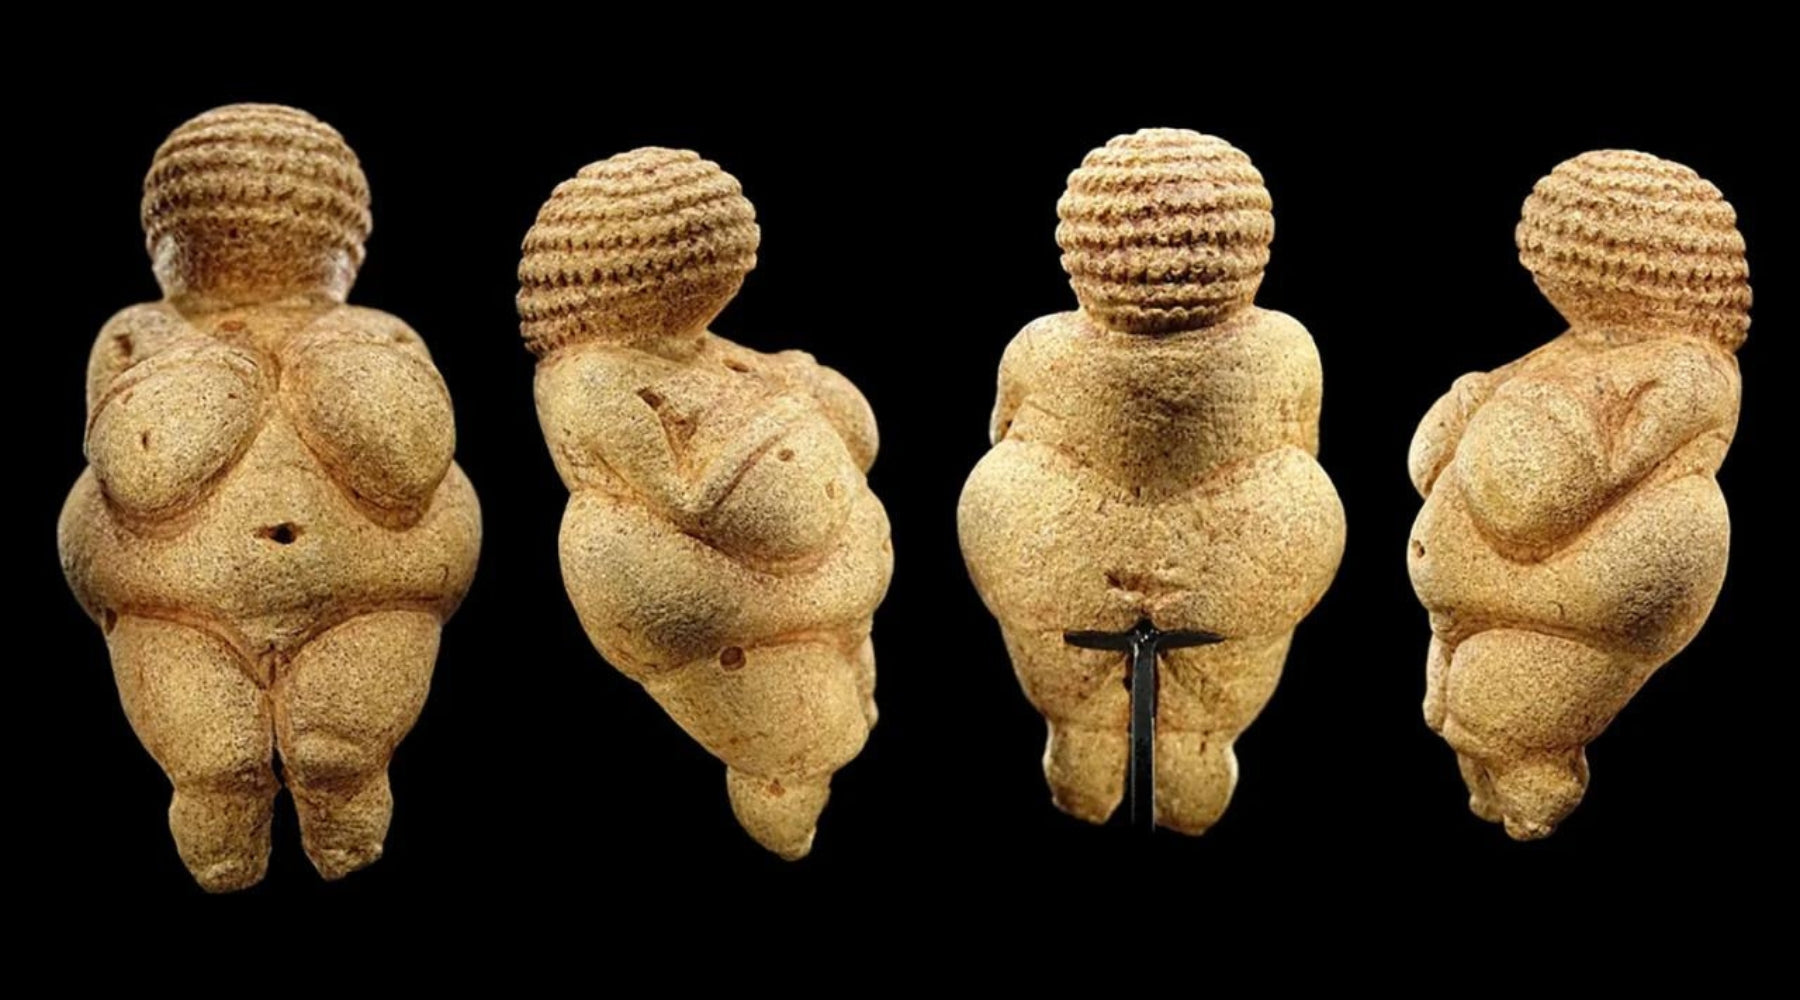 The Venus of Willendorf or fertility goddess